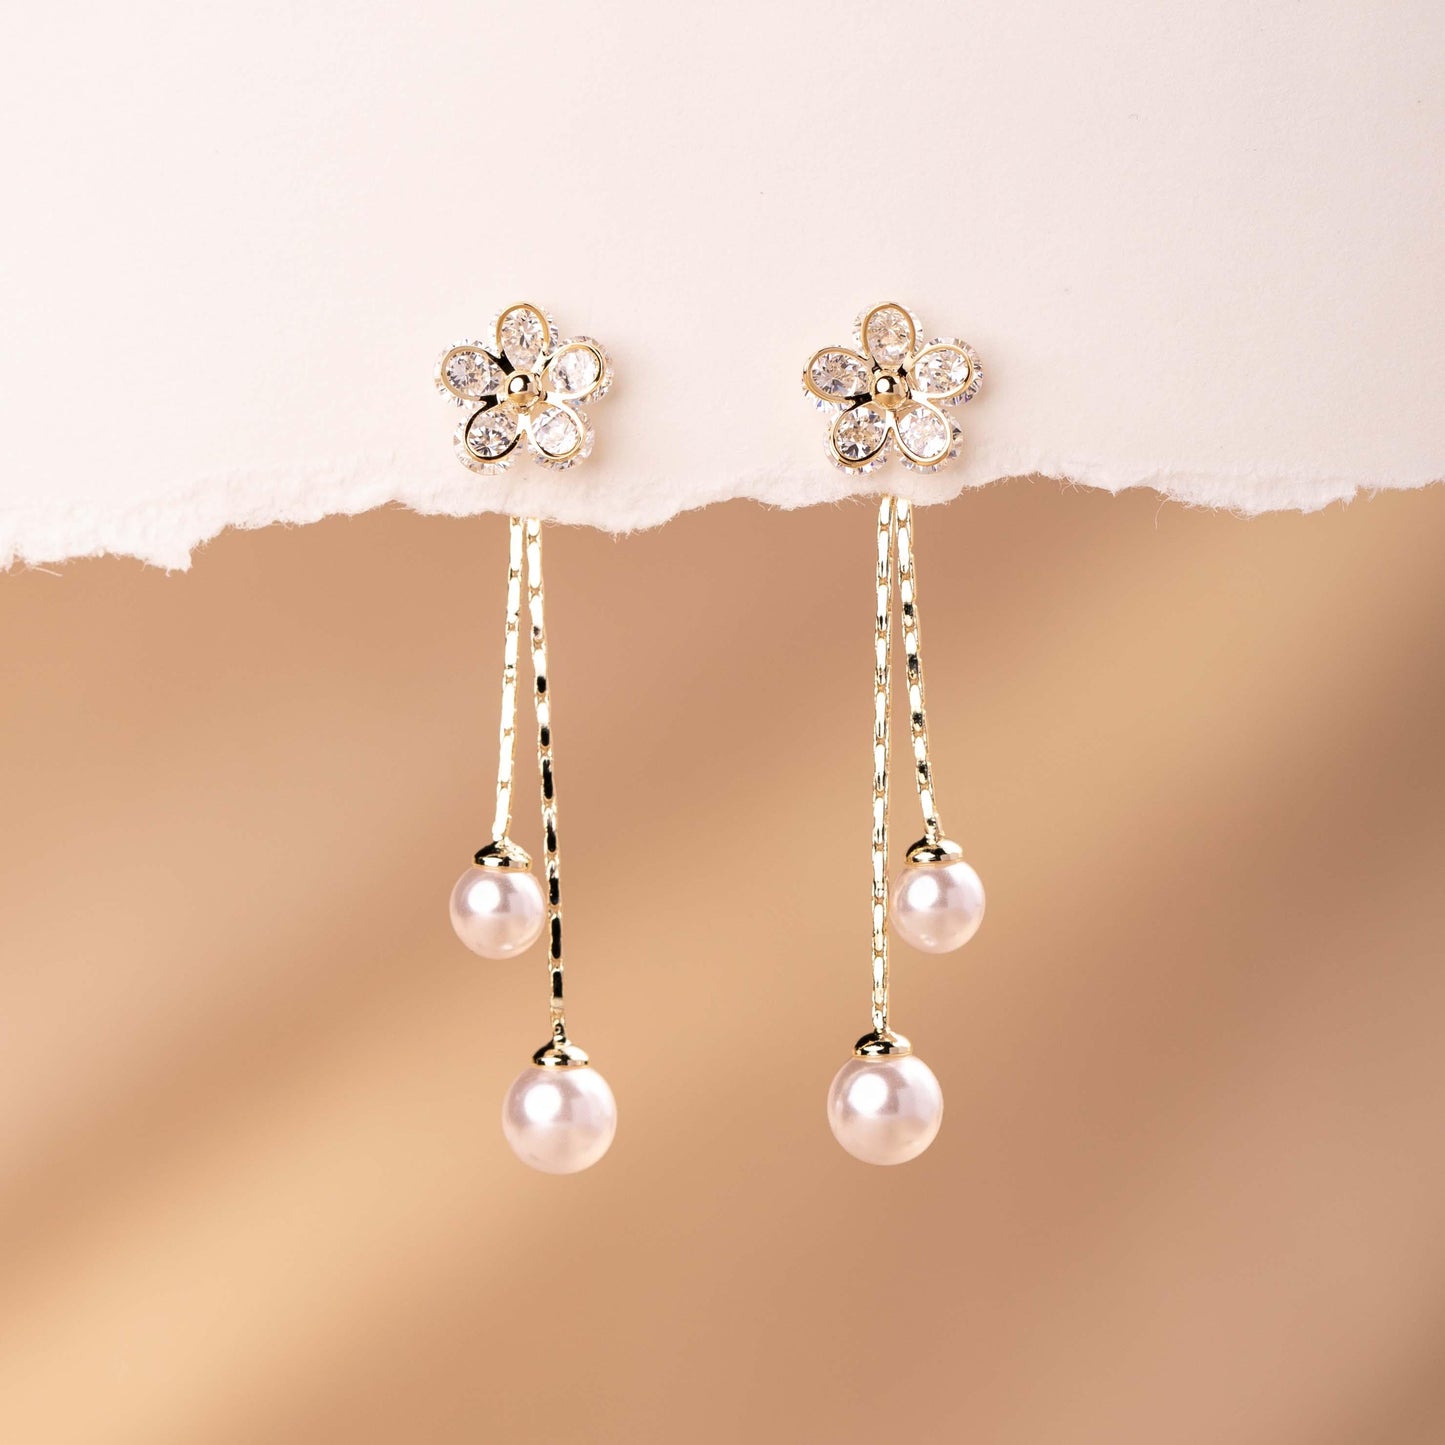 Flower Drop Earrings with Pearls - saltycandy